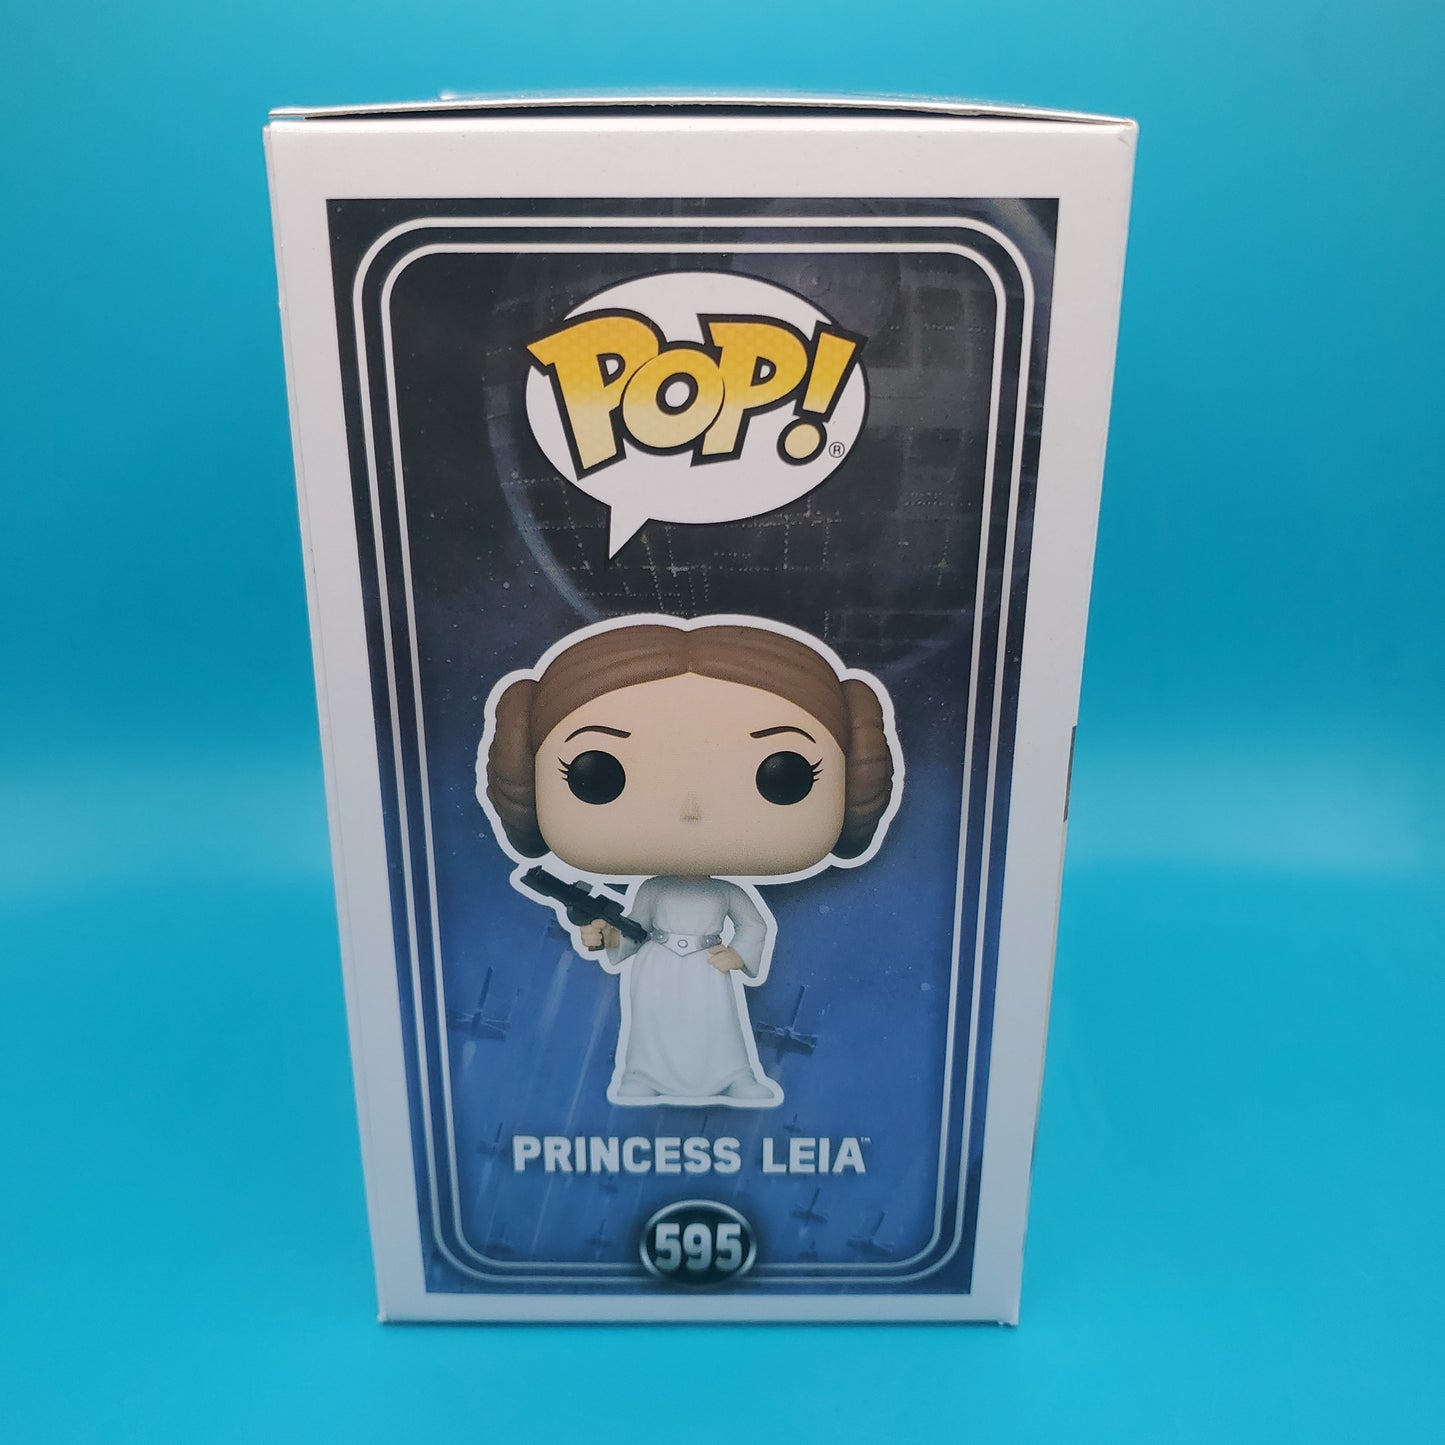 Princess Leia - 595 - Star Wars